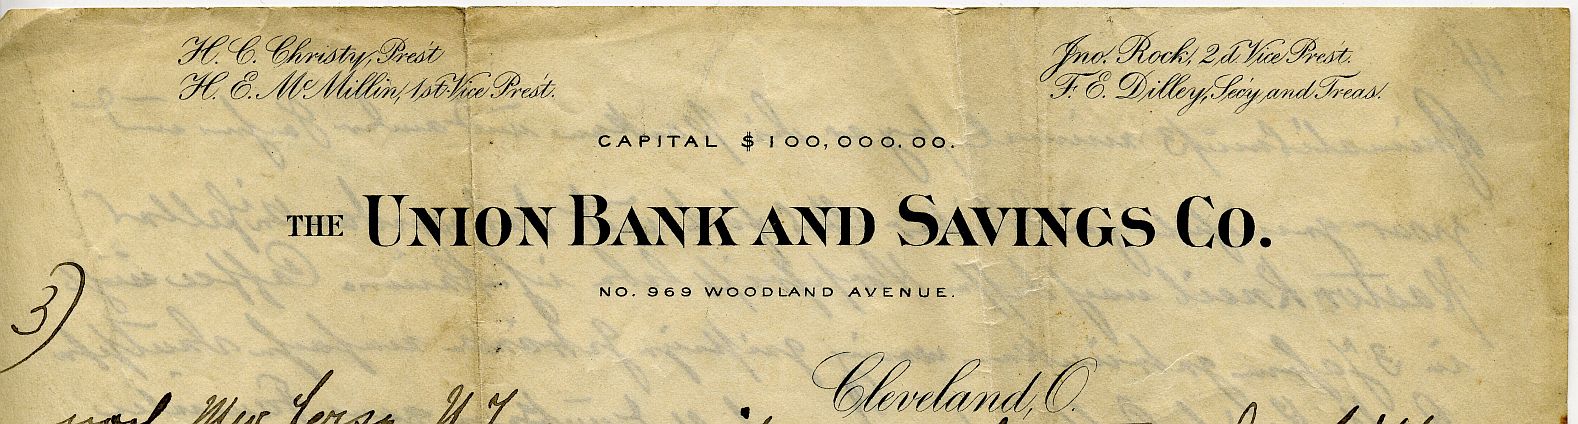 Union Bank and Savings, Cleveland, Ohio